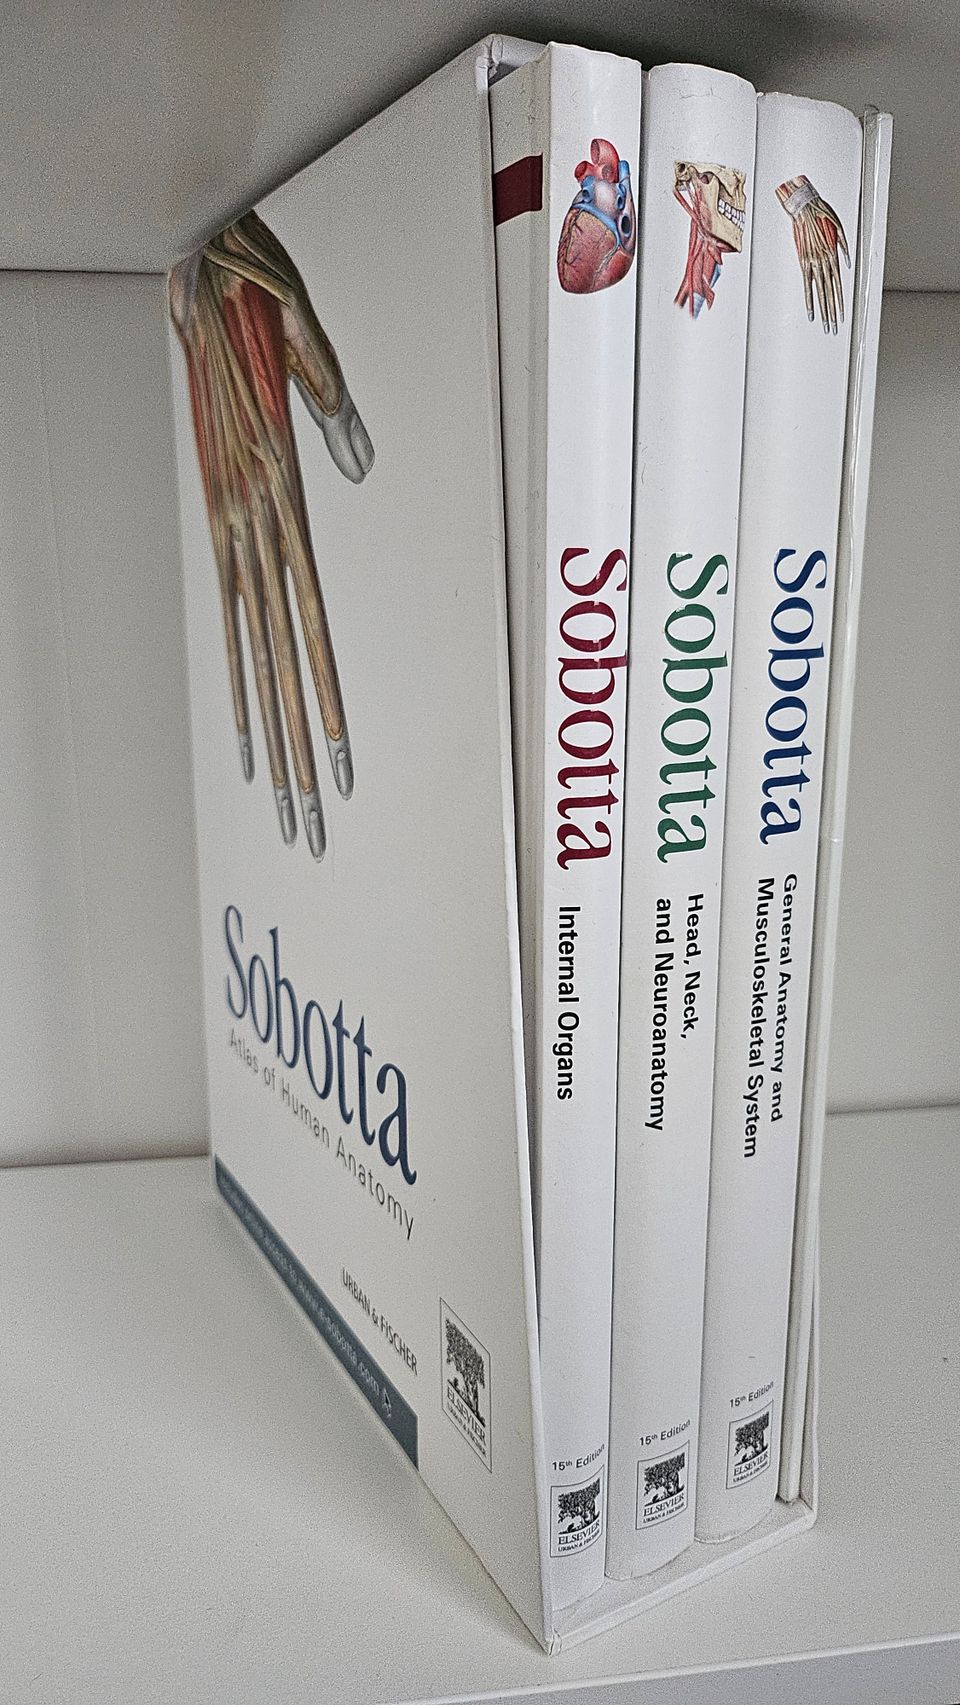 Sobotta Atlas of Human Anatomy 15th ed. (box of 3 books)